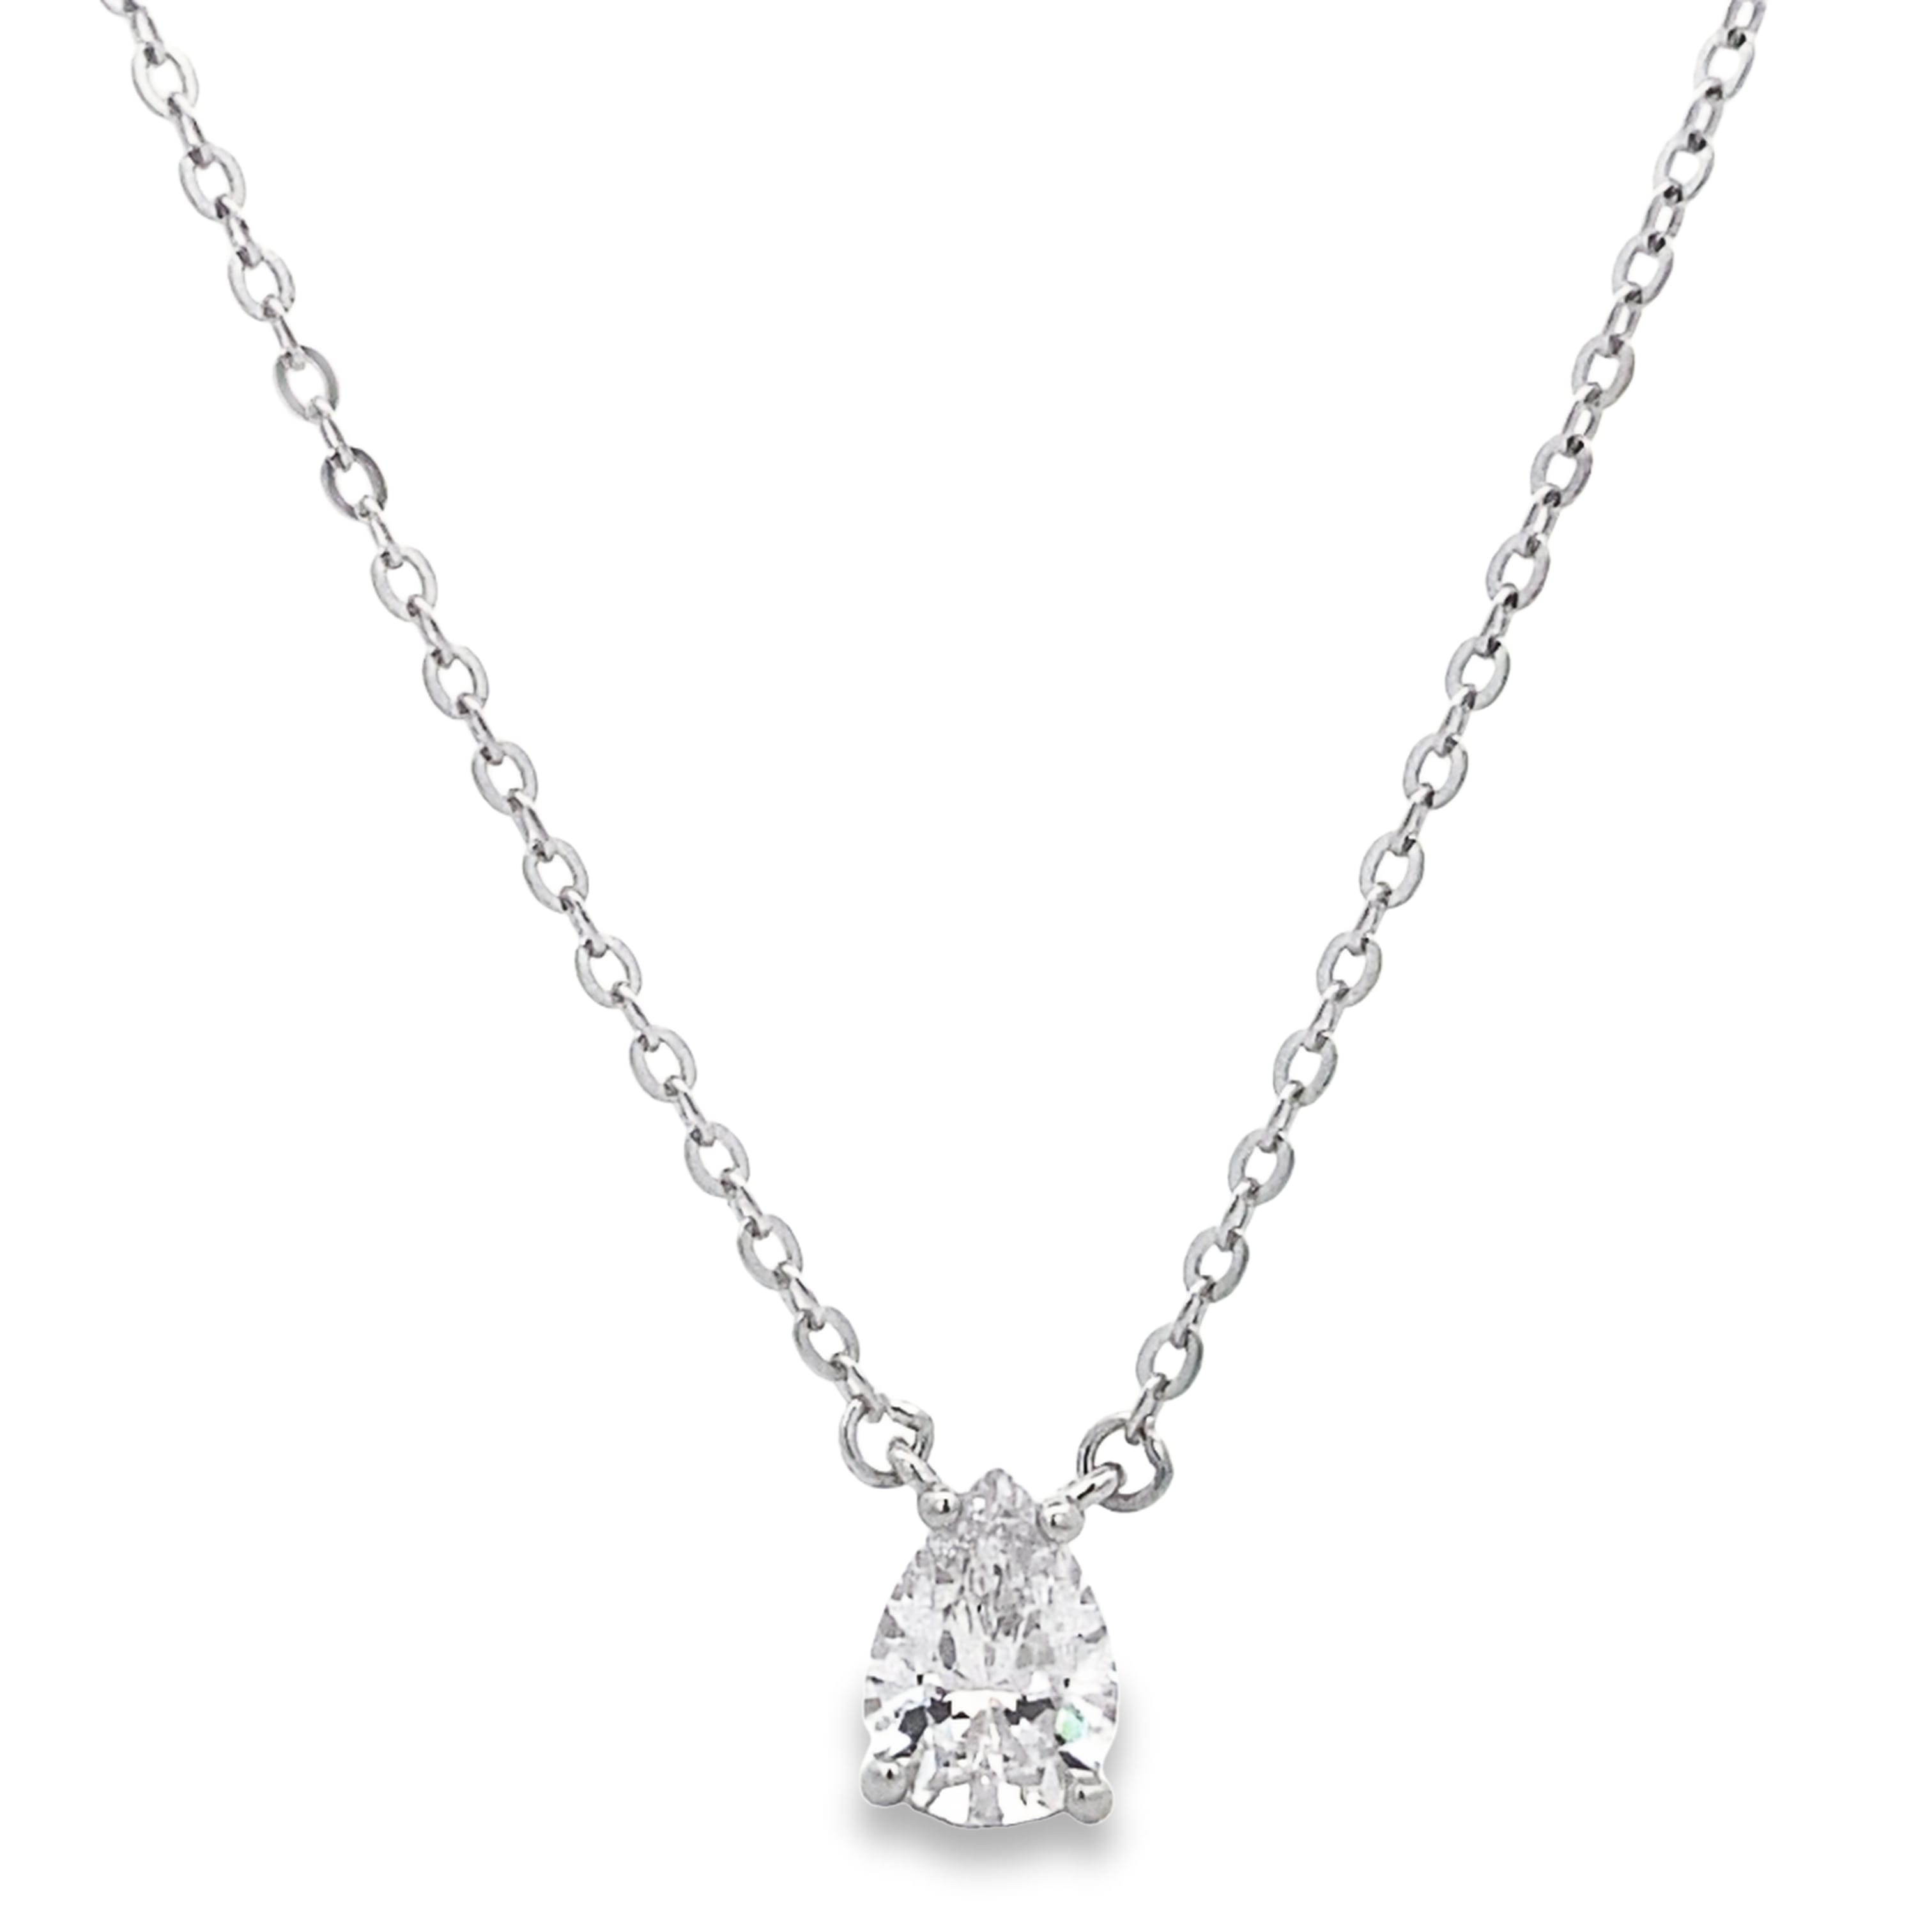 Elegant Pear-shape Silver Necklace